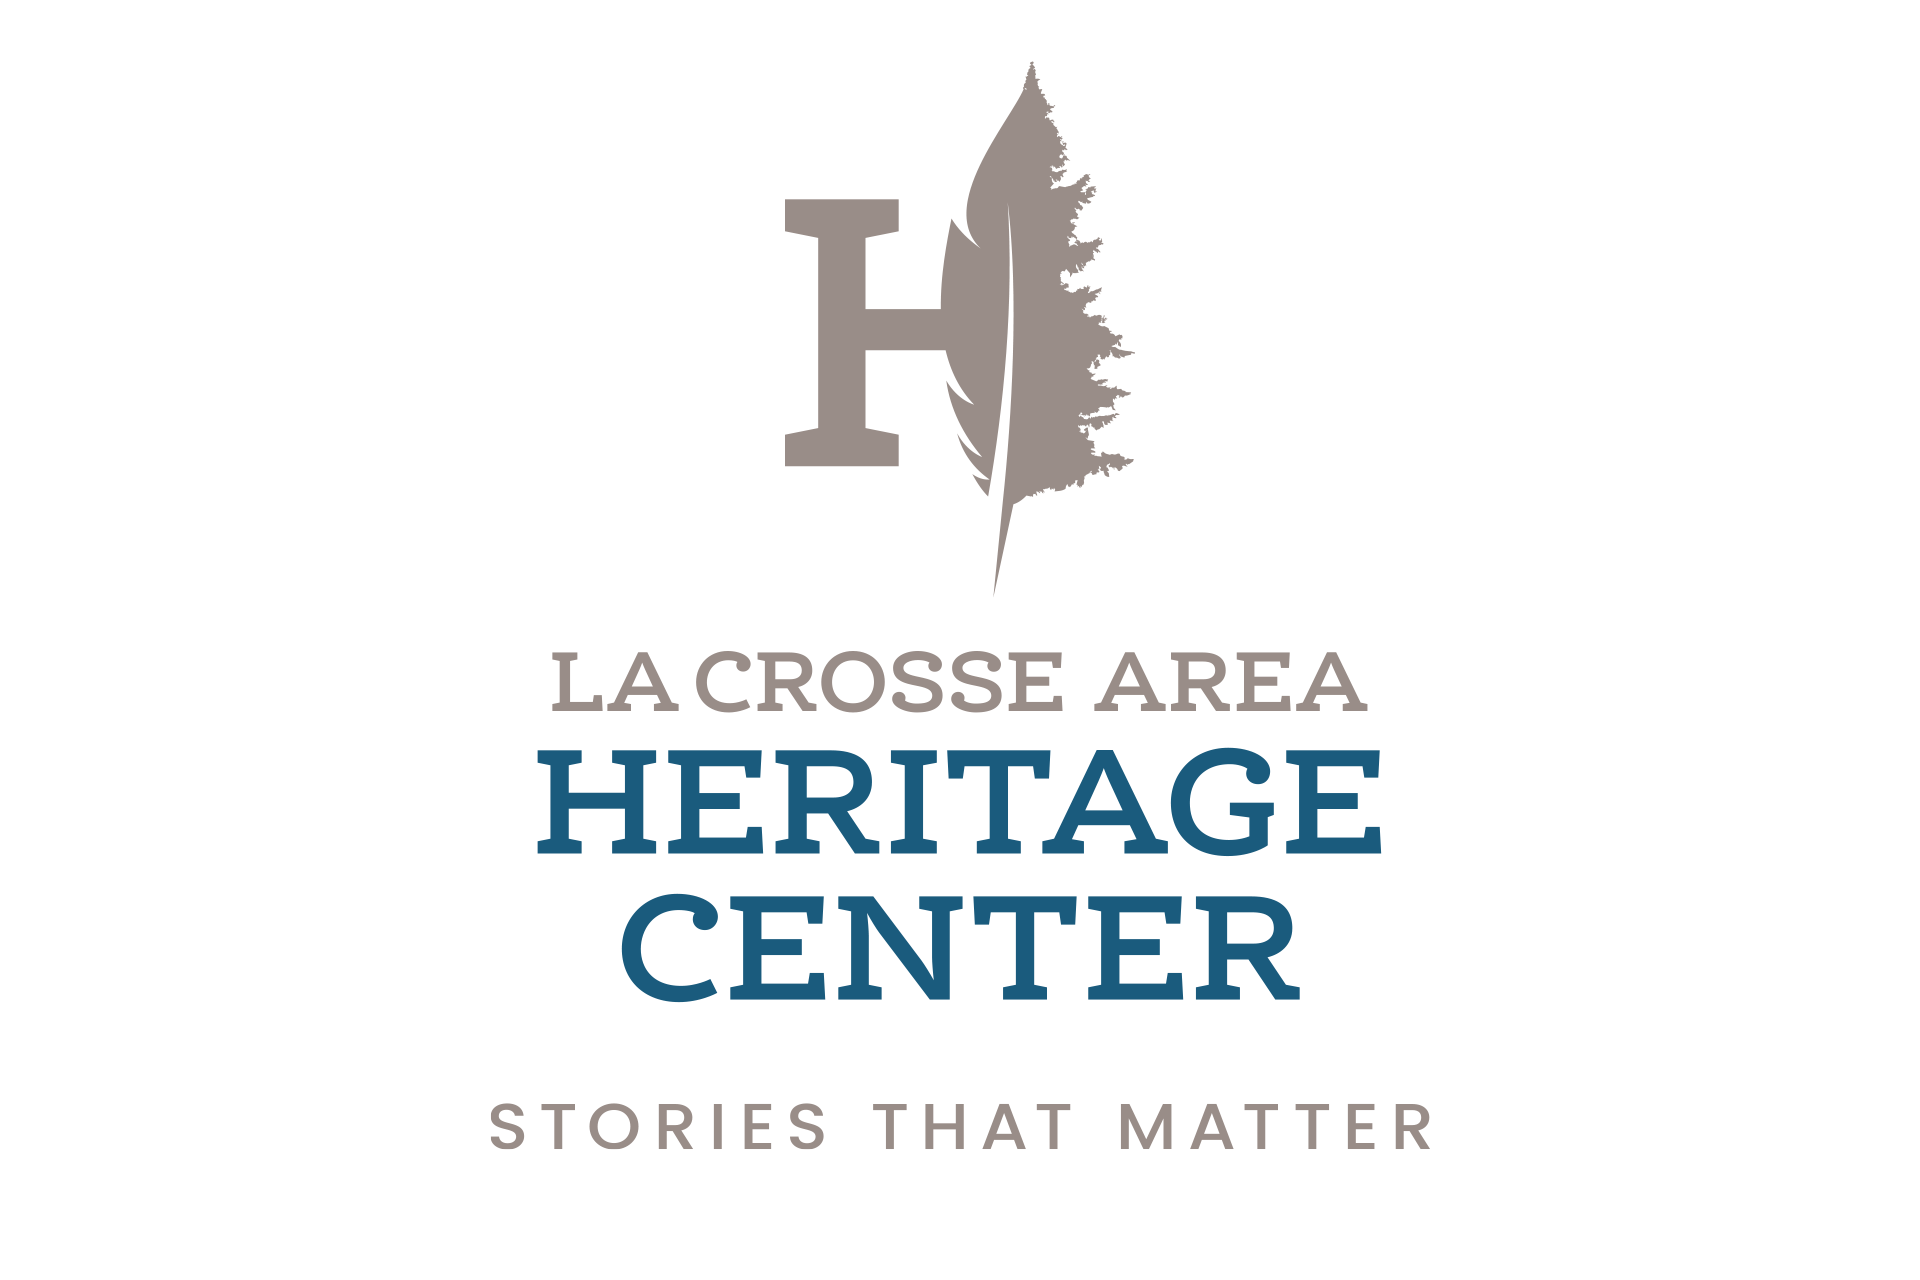 La Crosse Area Heritage Center color logo created by Vendi Advertising